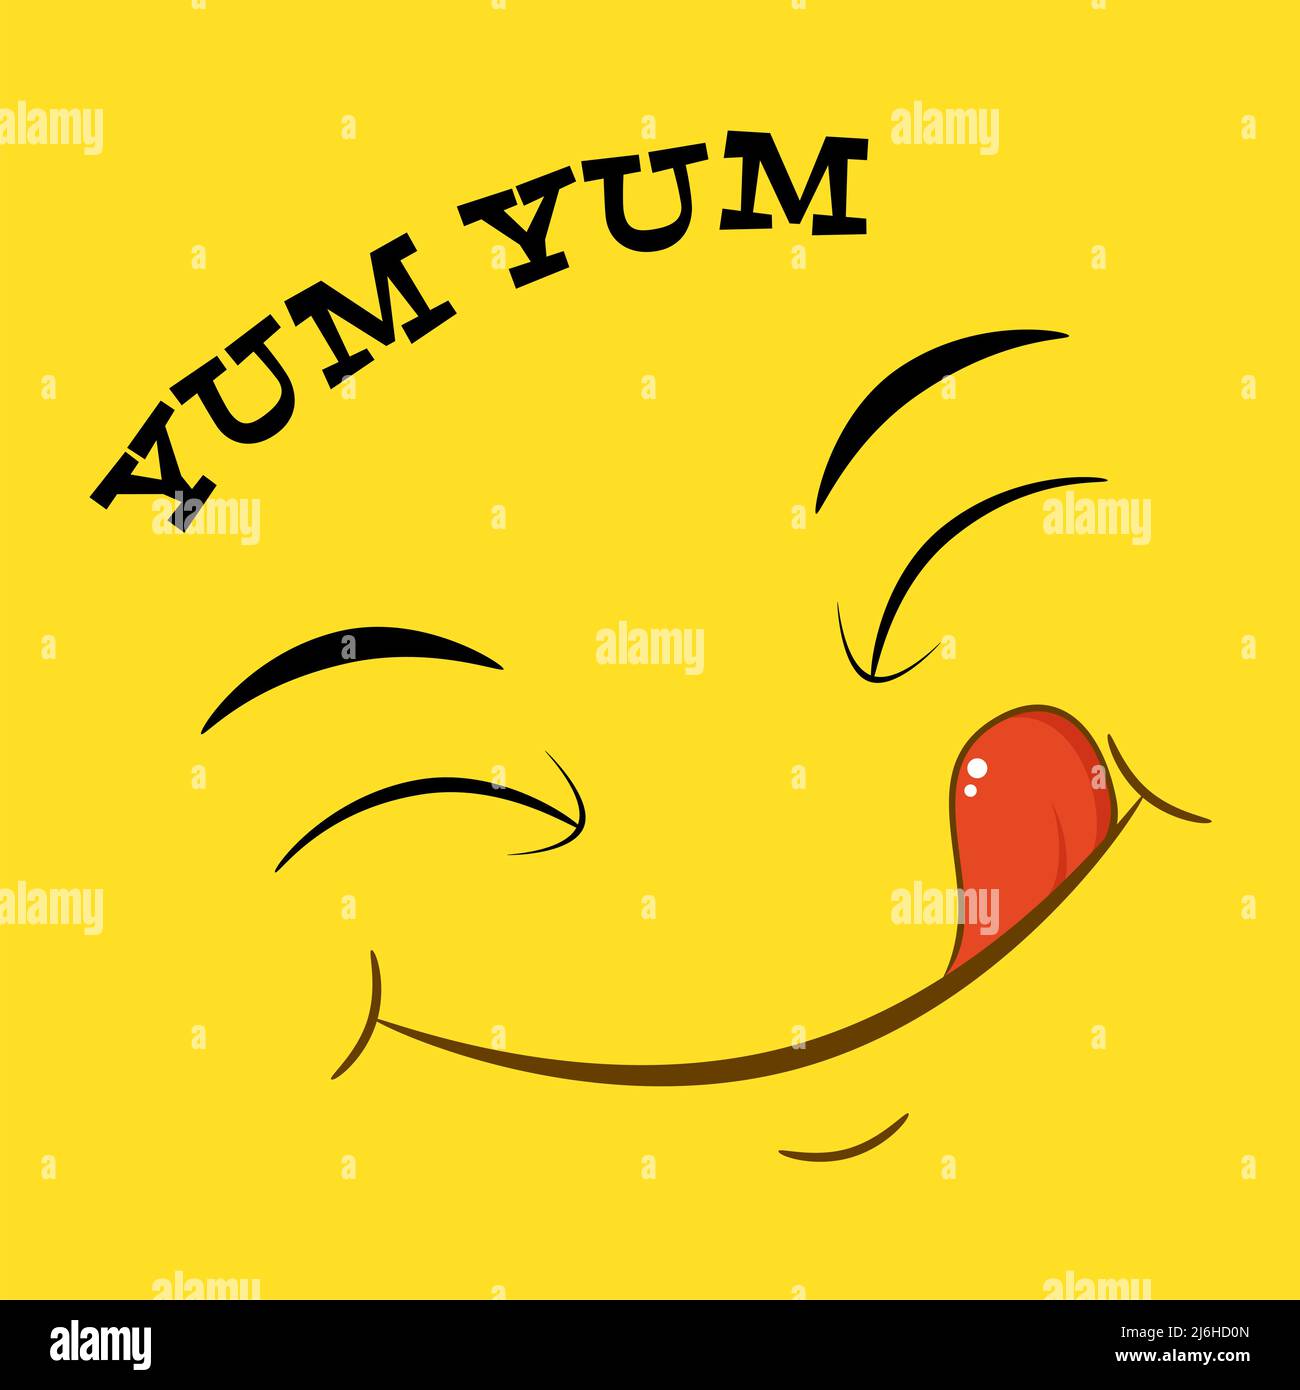 Emoji yum Stock Vector Images - Alamy